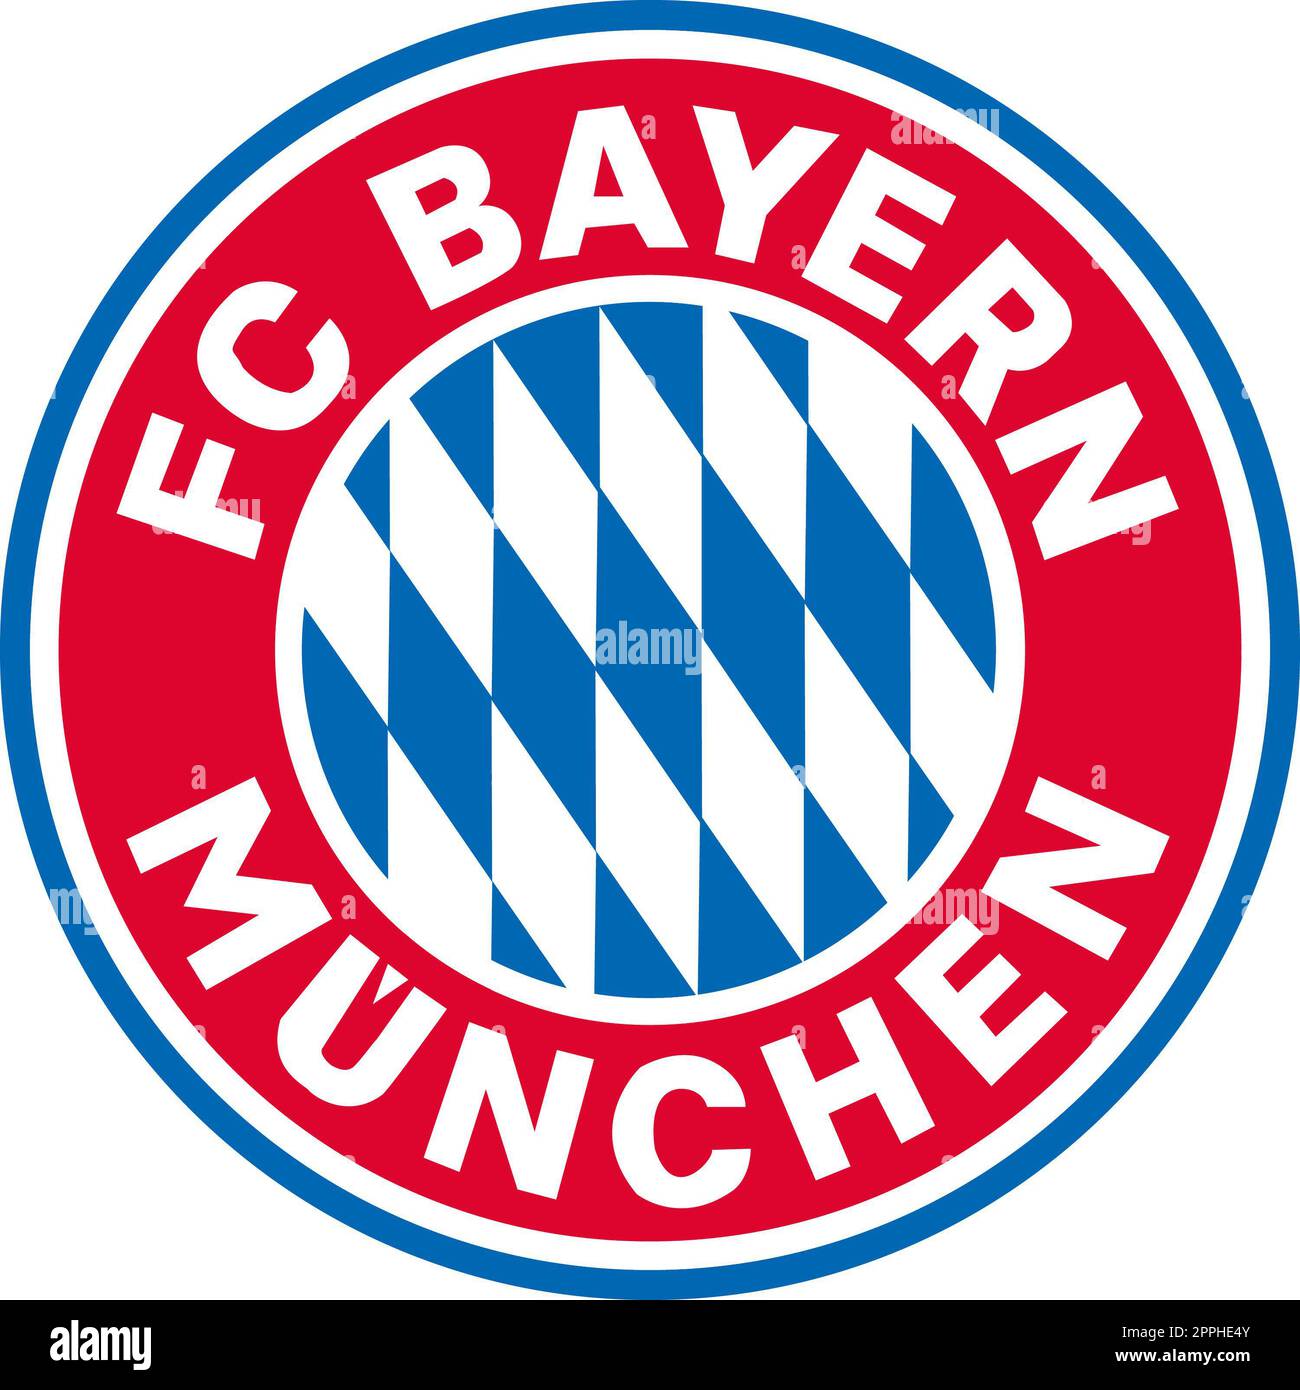 German football club logo. Translation Bayern Munich. Sports concept Stock Photo